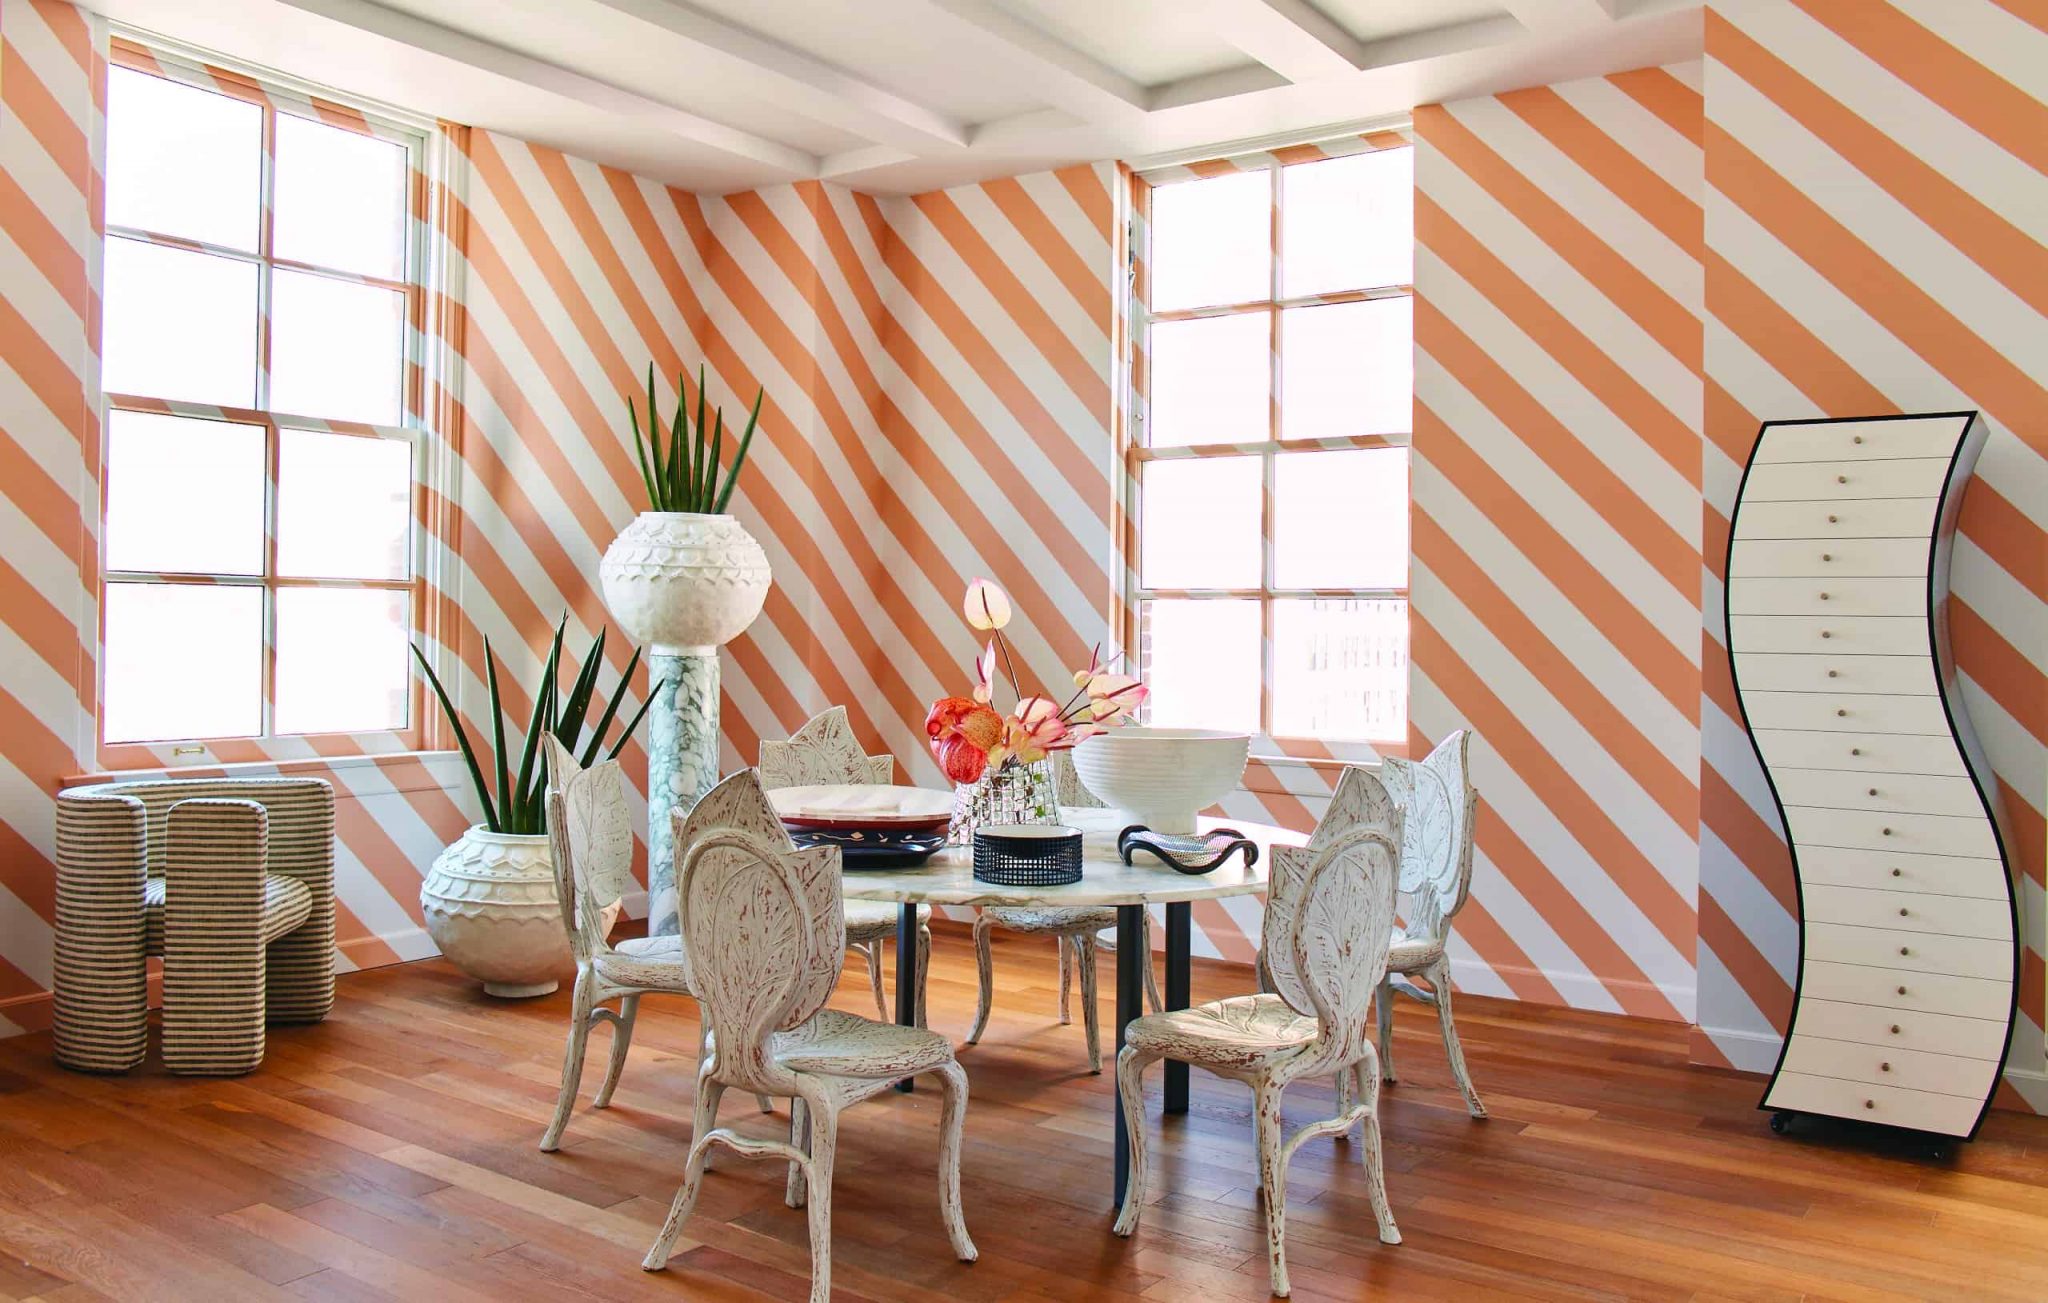 colorful interior design in orange hues by kelly wearstler